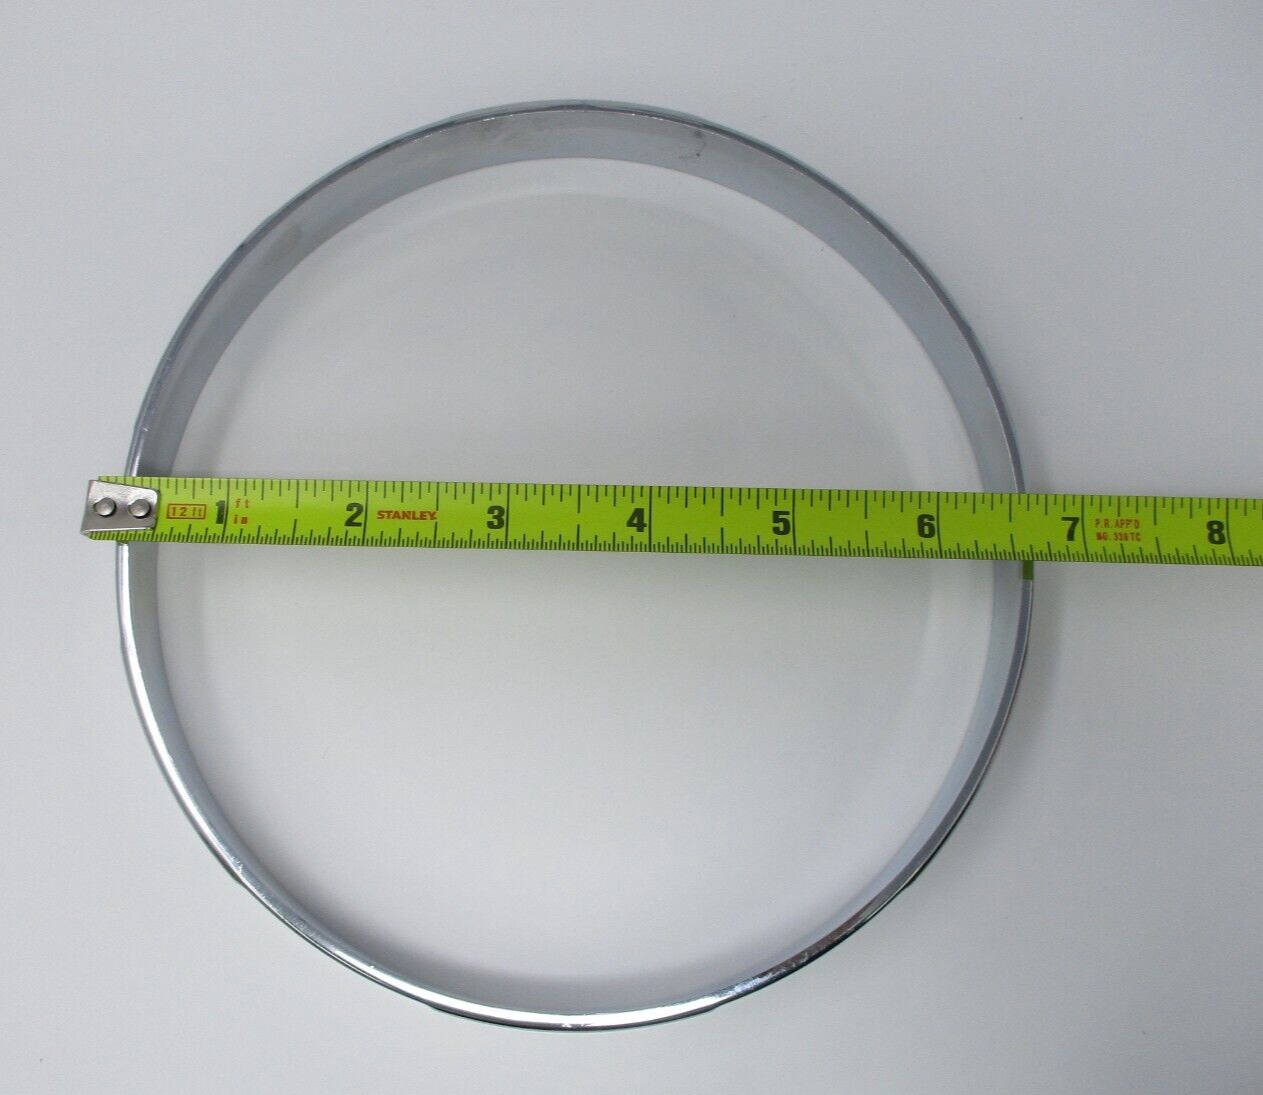 Spacer Ring for 7'' Headlight PFX2231